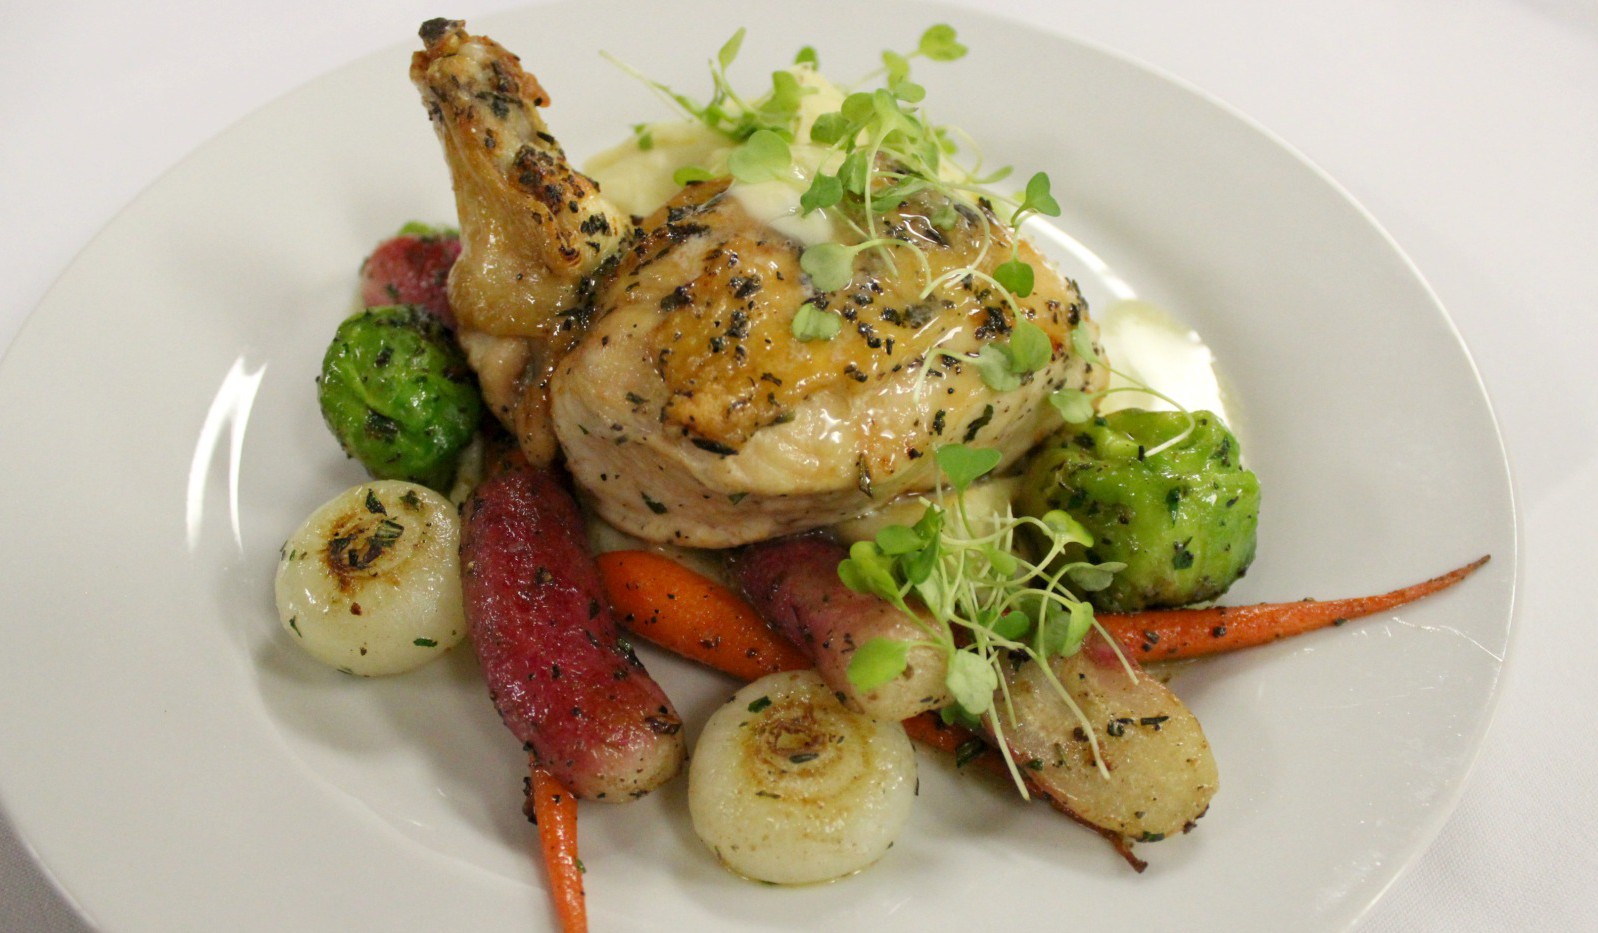 Roasted chicken over fresh vegetables 